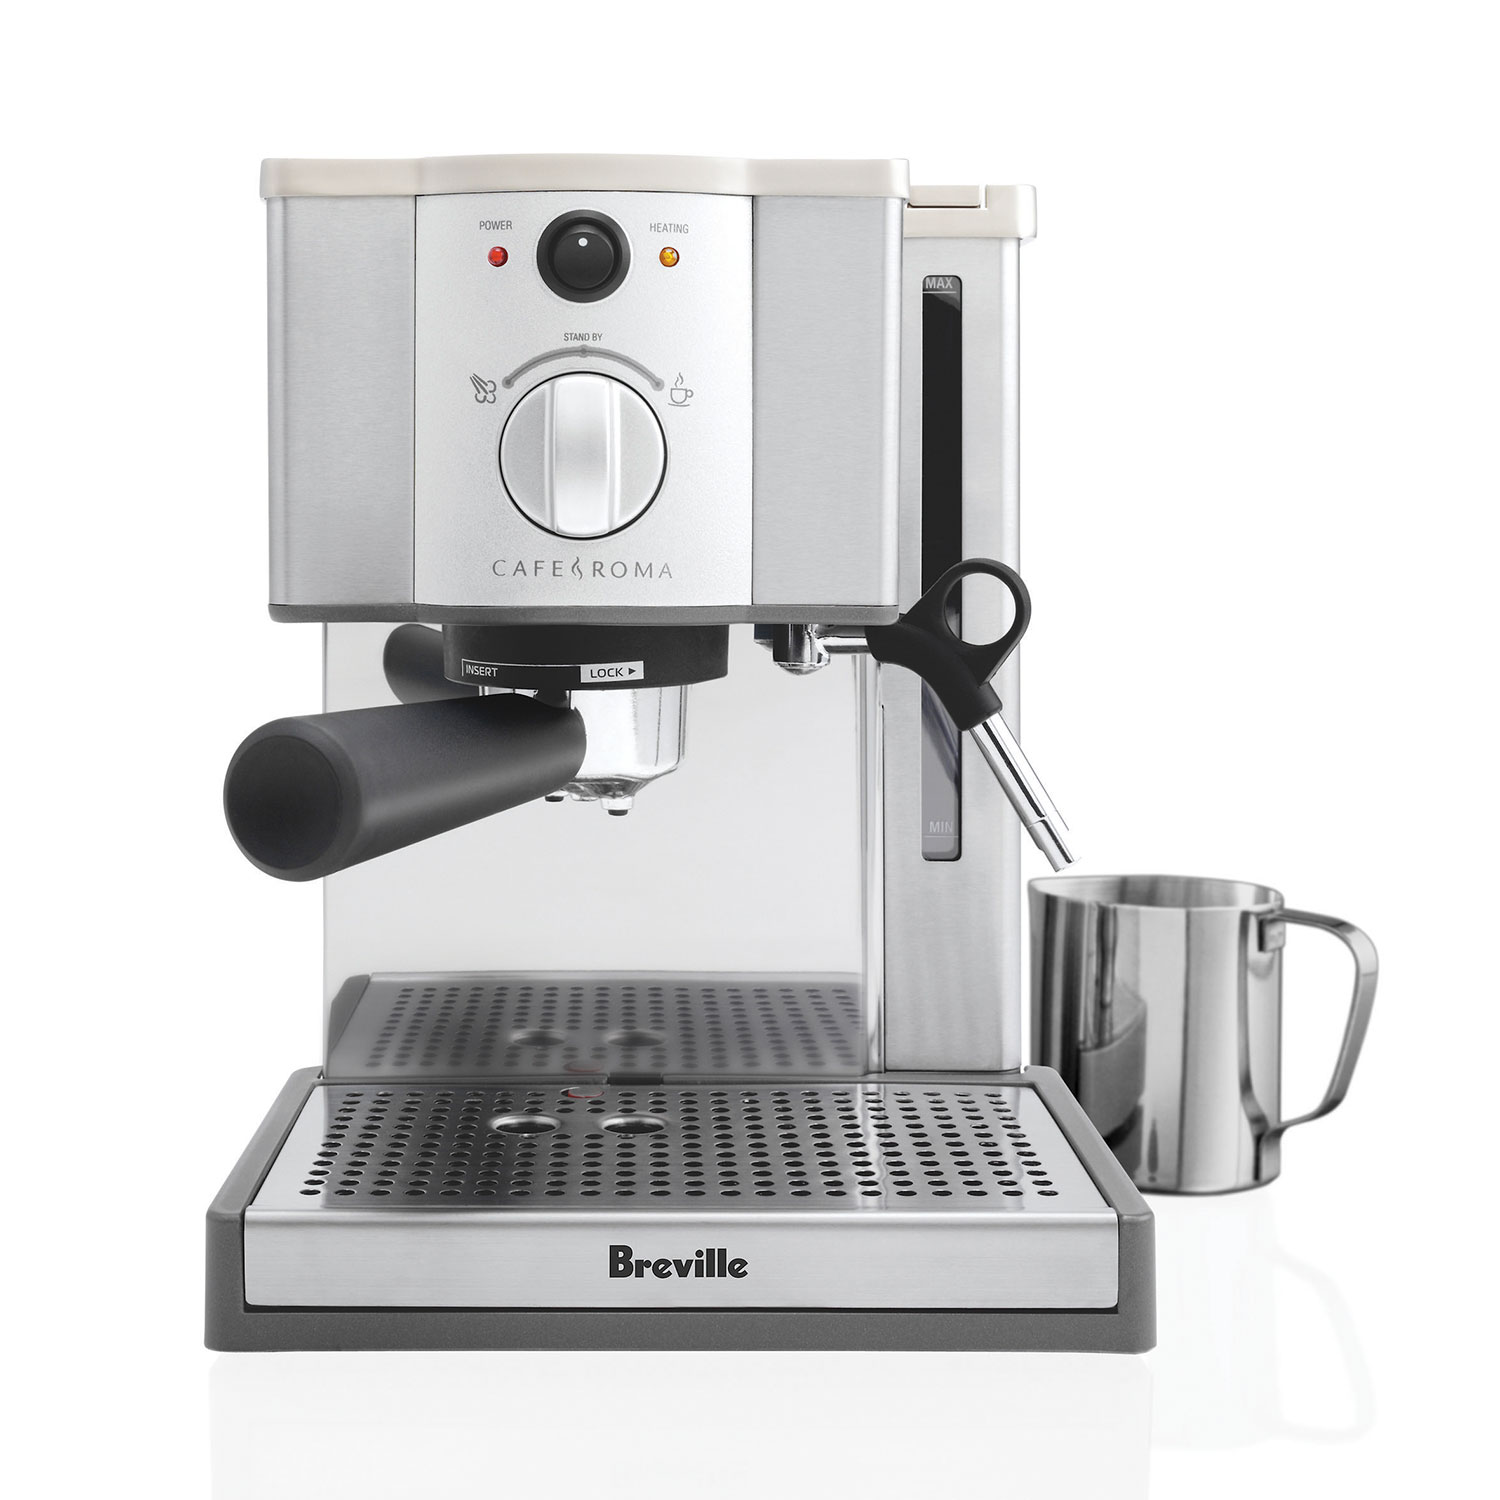  Machine à espresso à pompe Café Roma de Breville